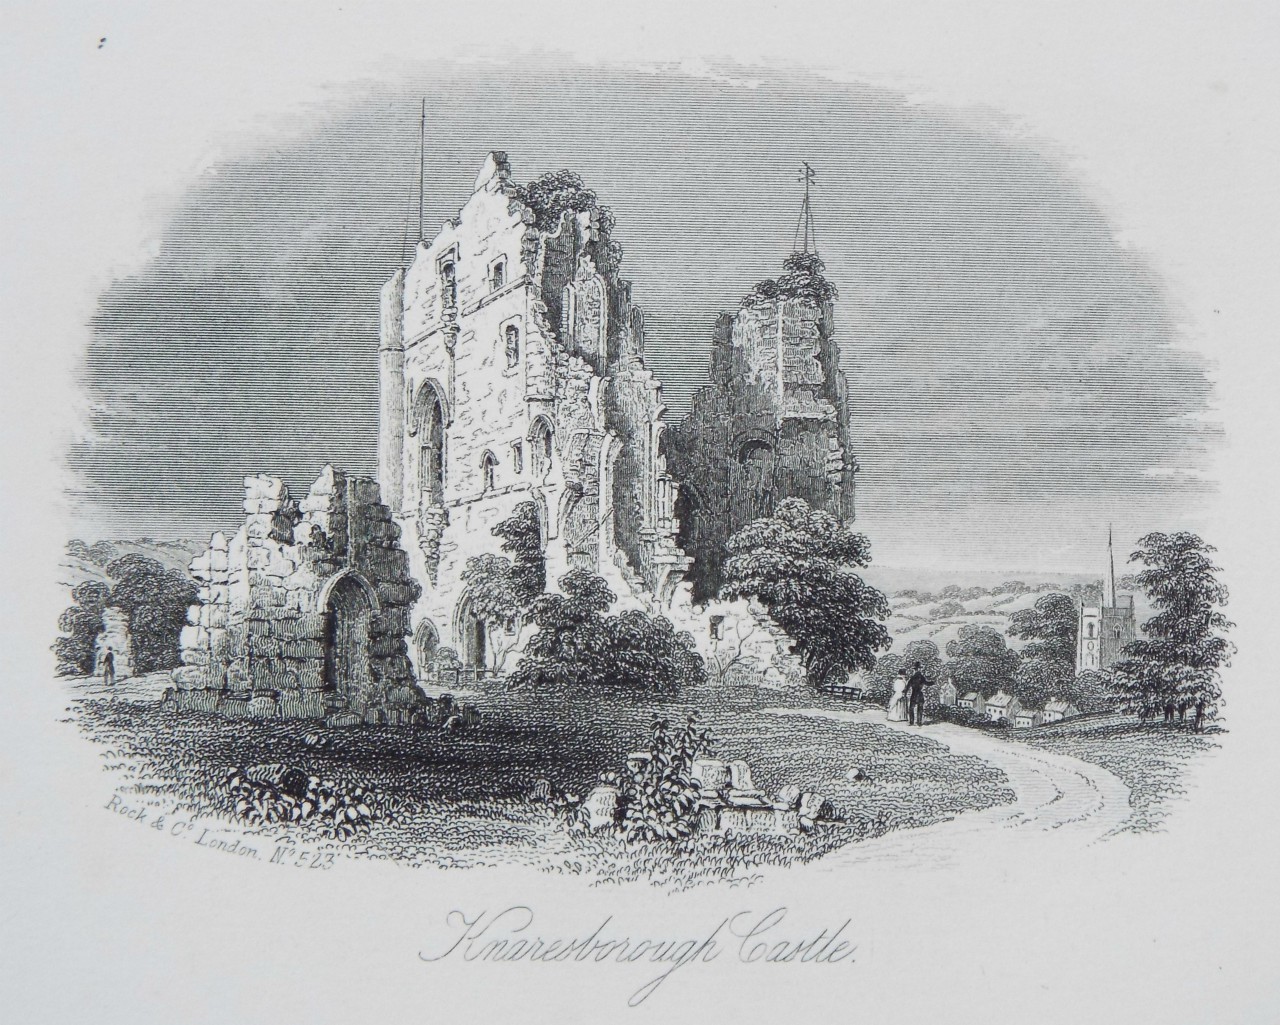 Steel Vignette - Knaresborough Castle. - Rock